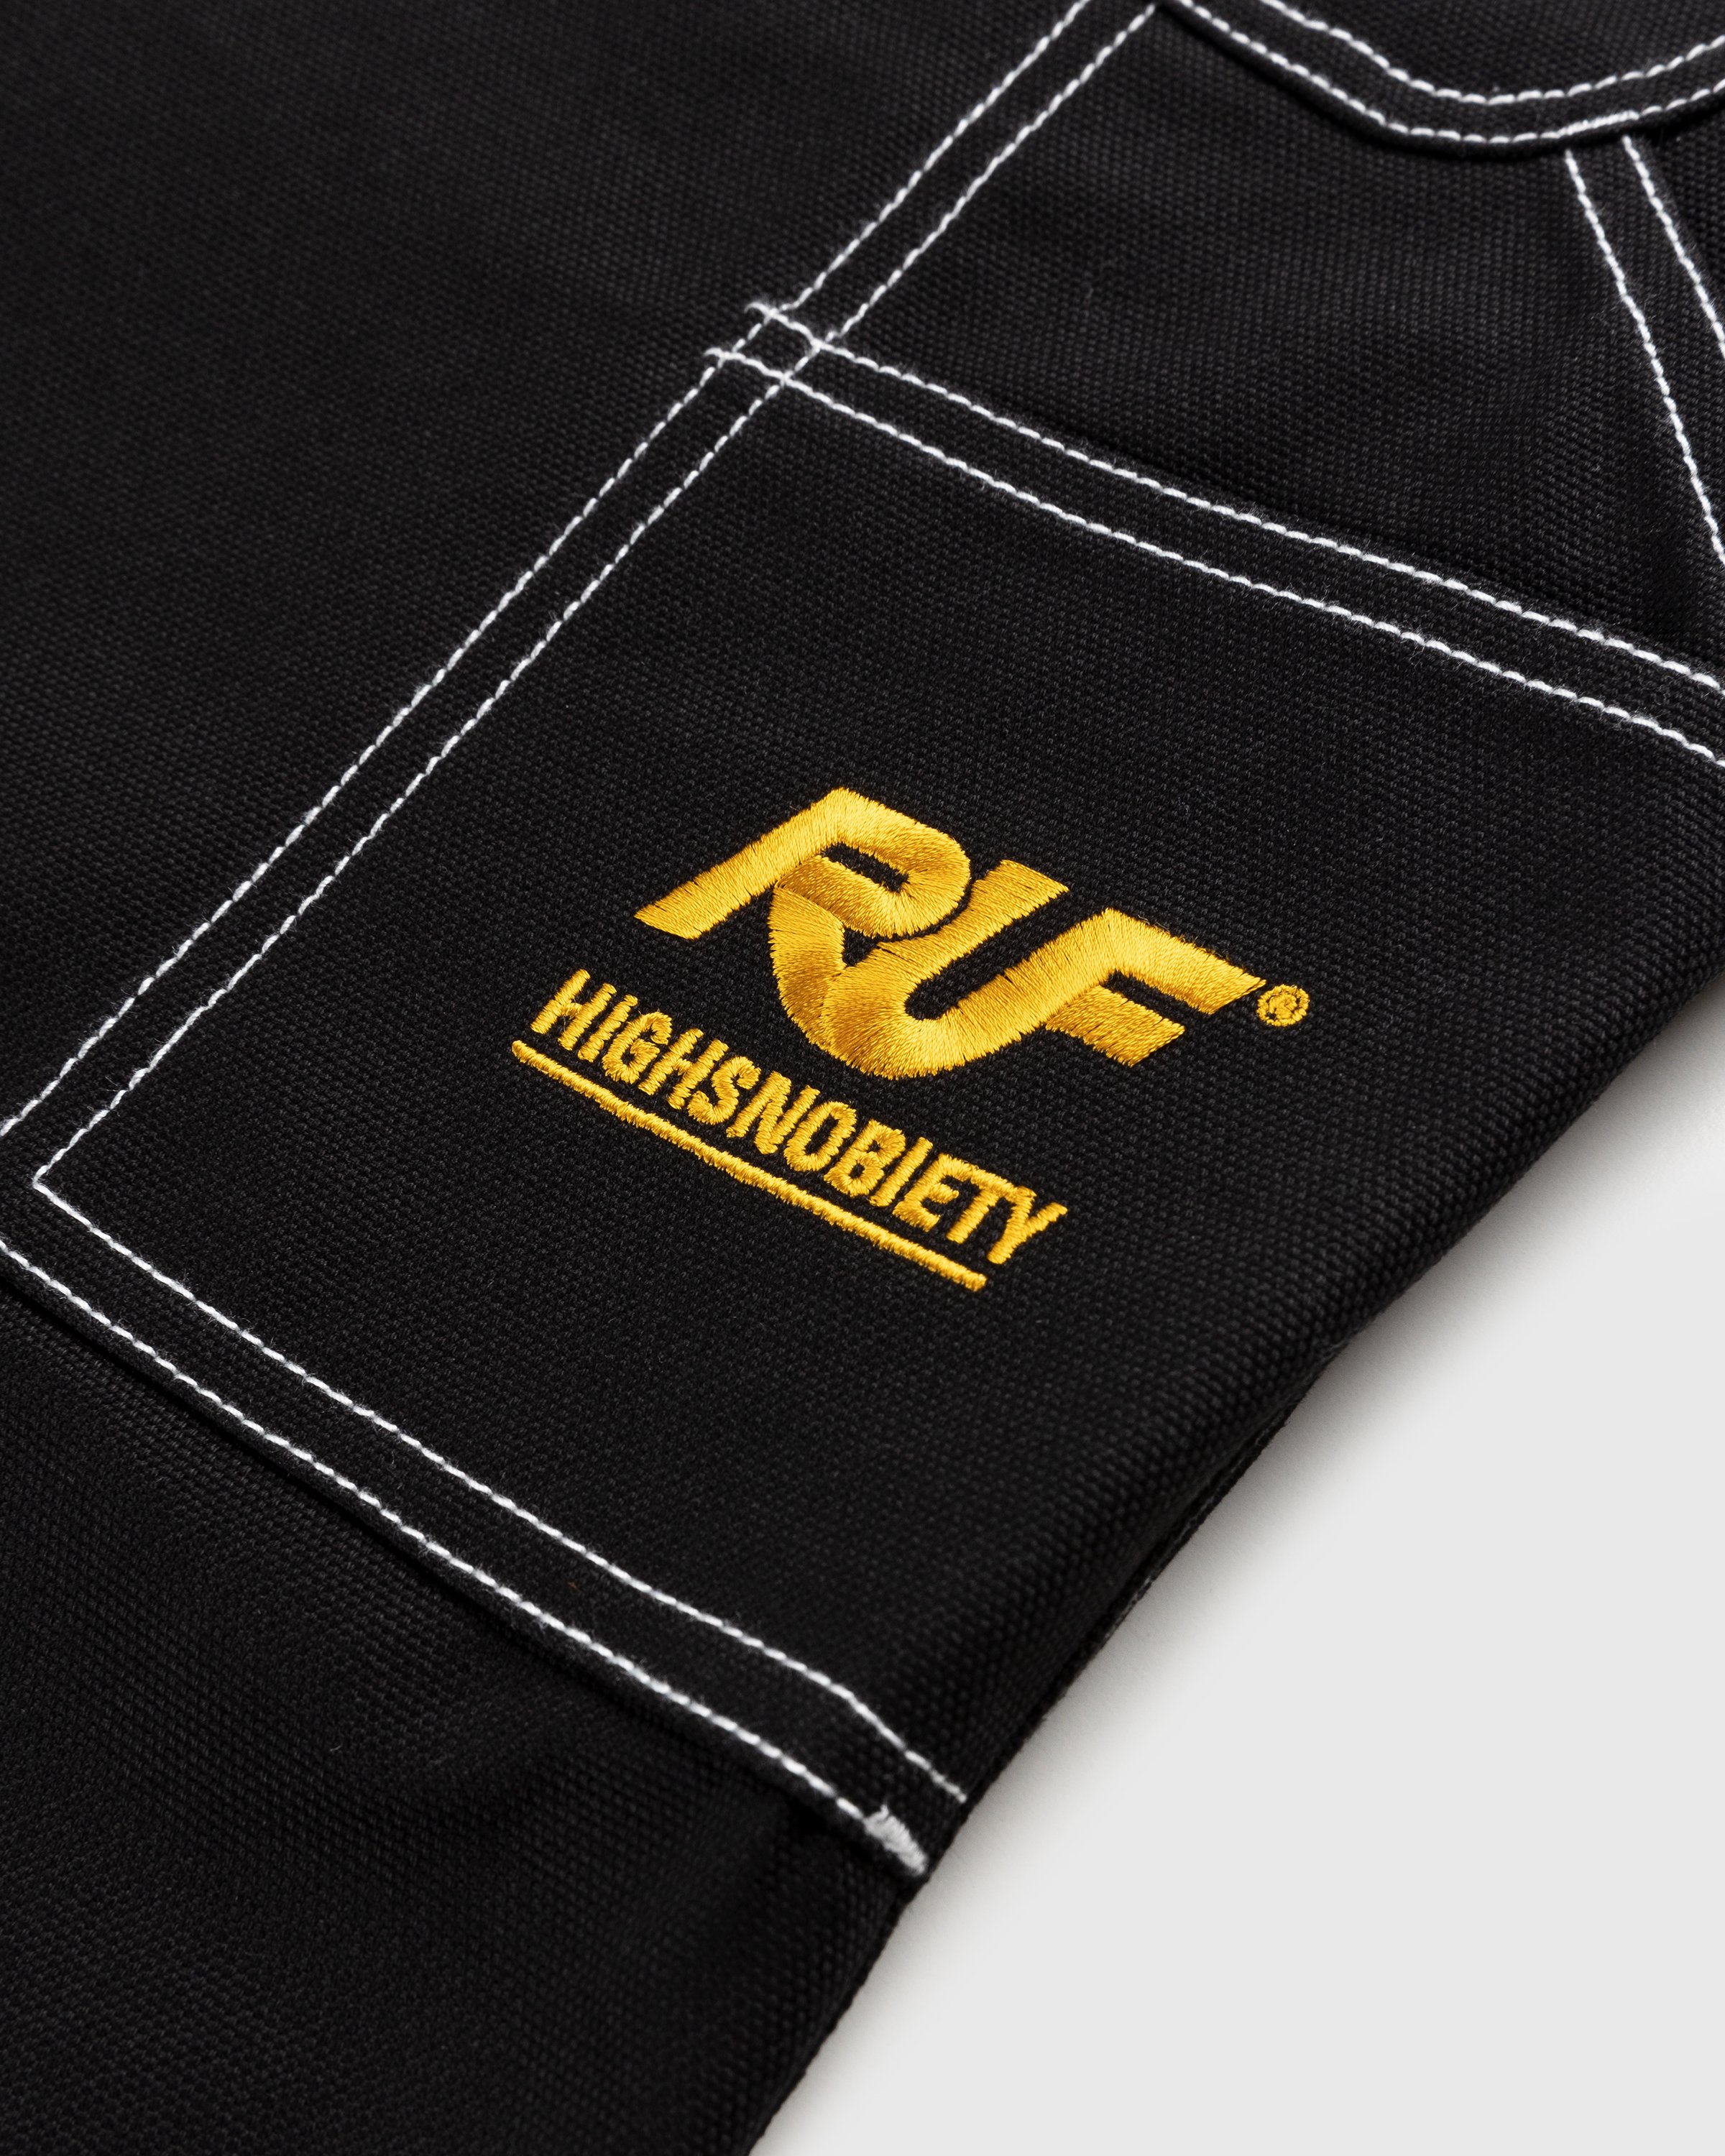 RUF x Highsnobiety - Cotton Work Pants Black - Clothing - Black - Image 5